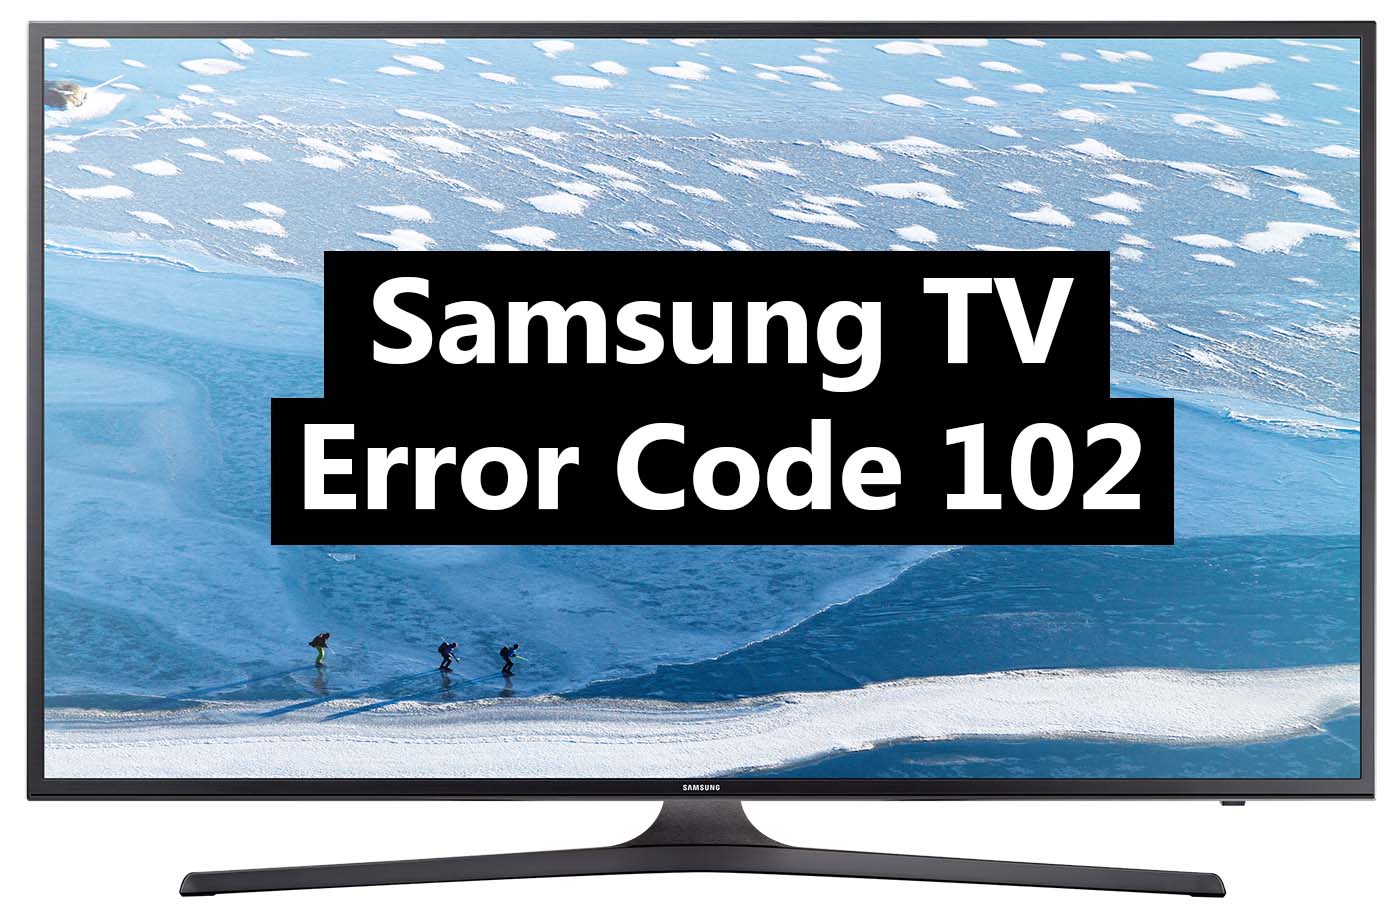 Samsung TV Error Code 102